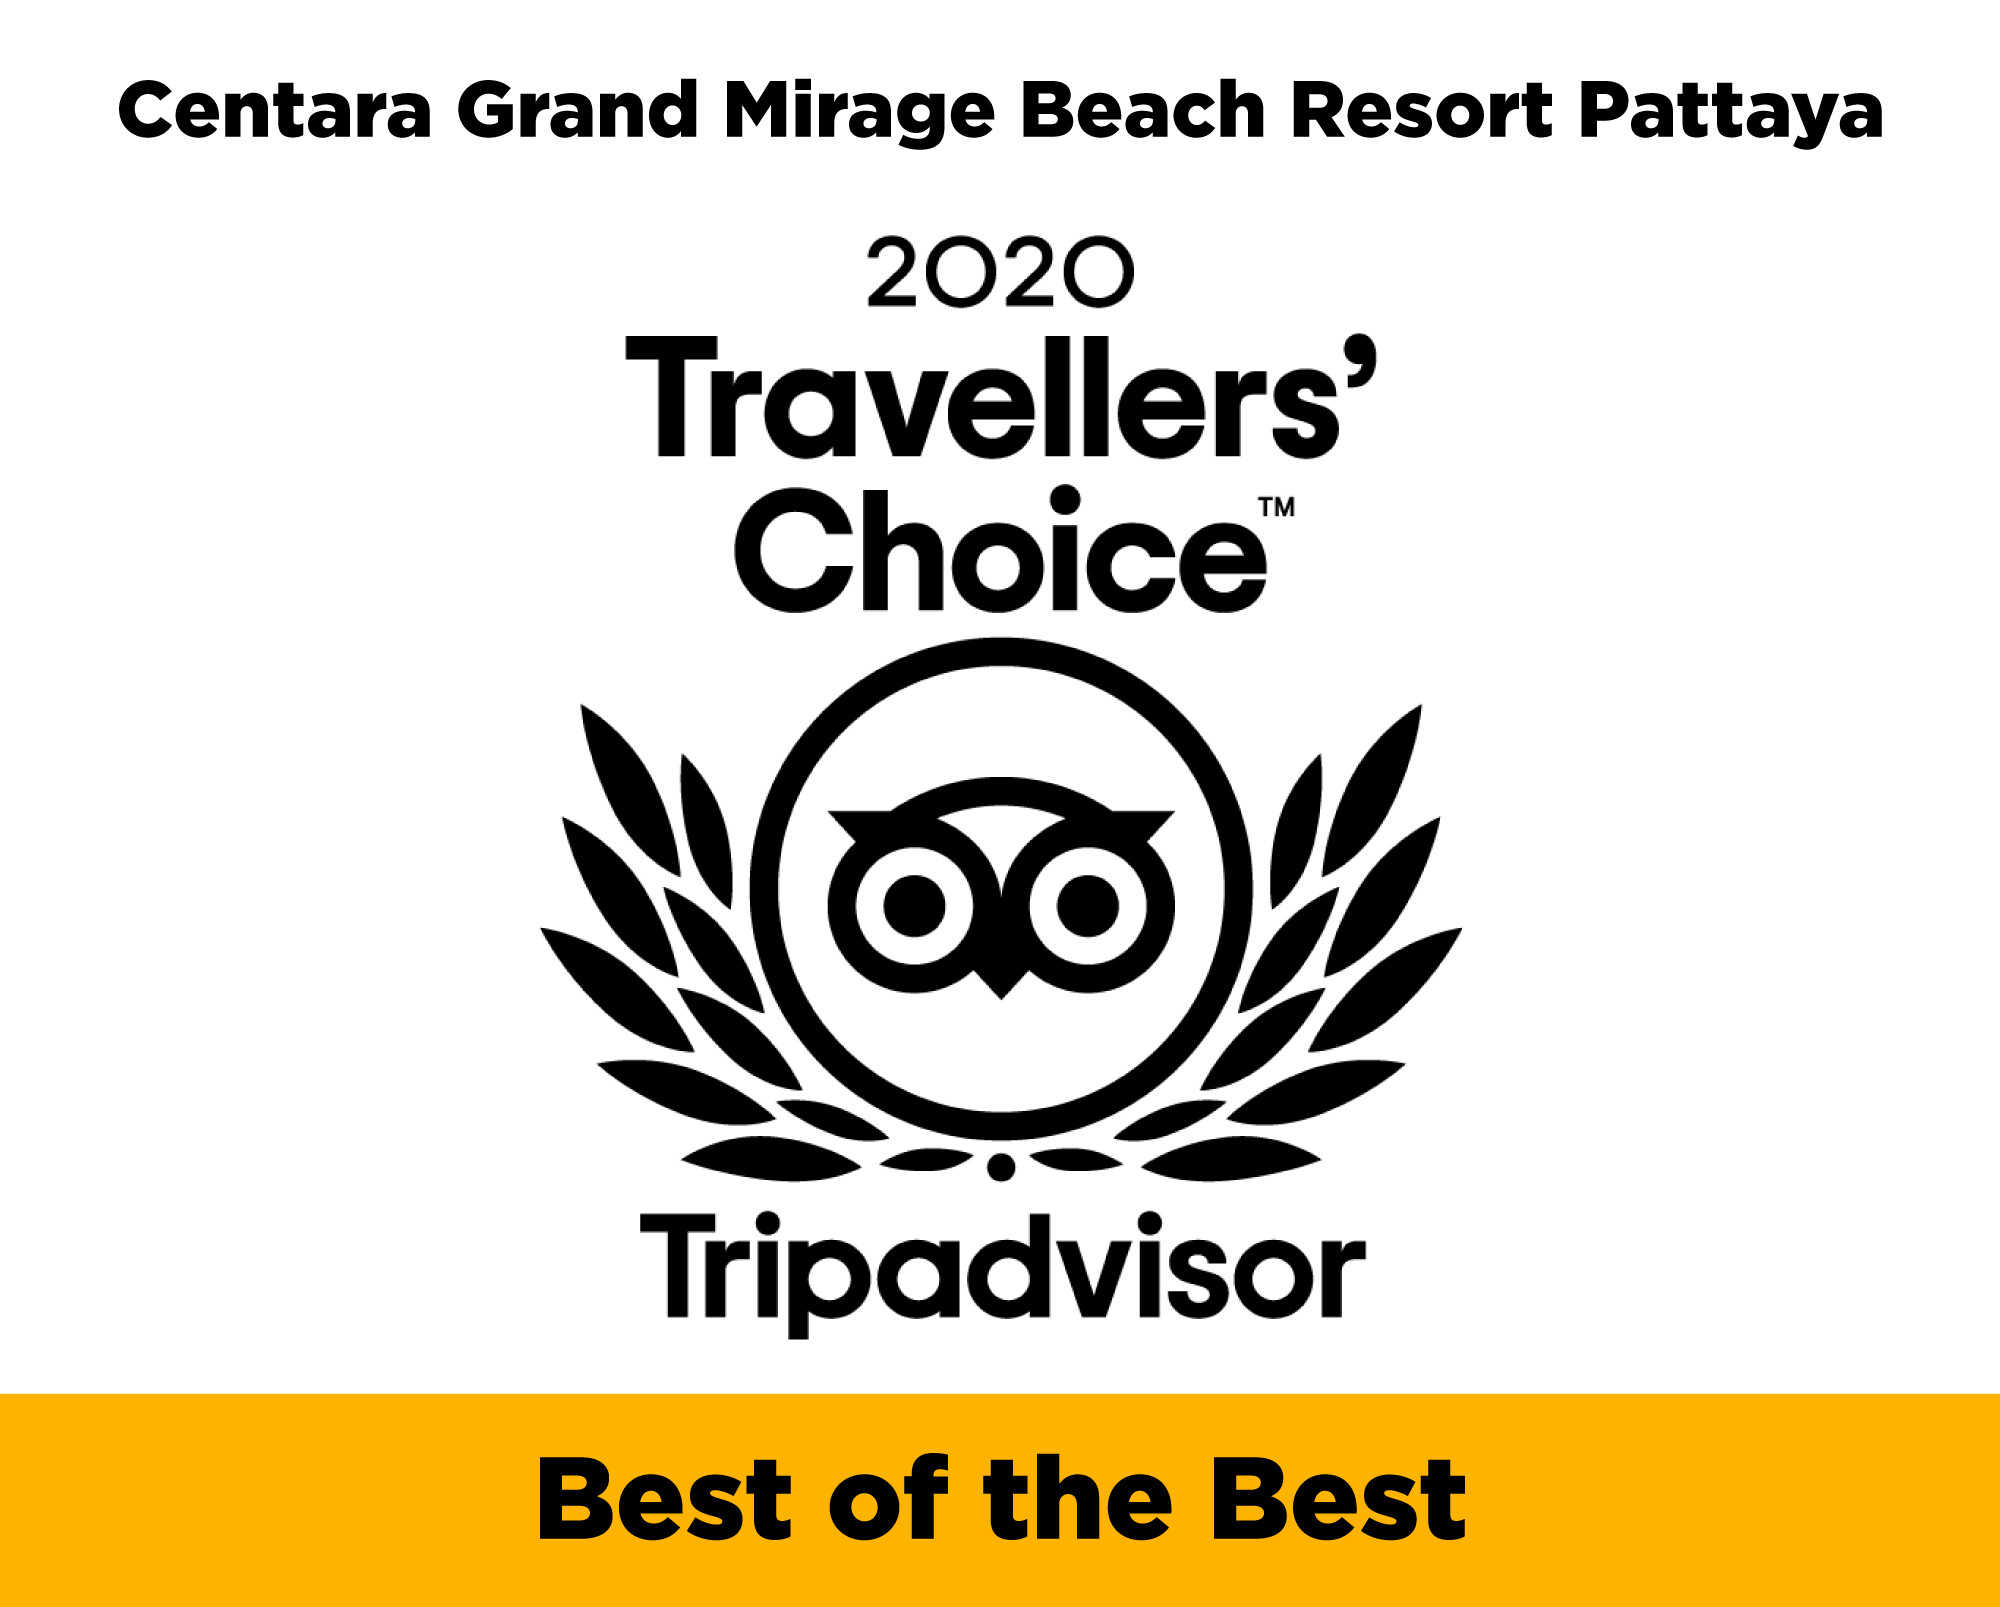 Centara Grand Mirage Beach Resort Pattaya in Top 25 Family Hotels Travelers' Choice Best of the Best award in Thailand 2020